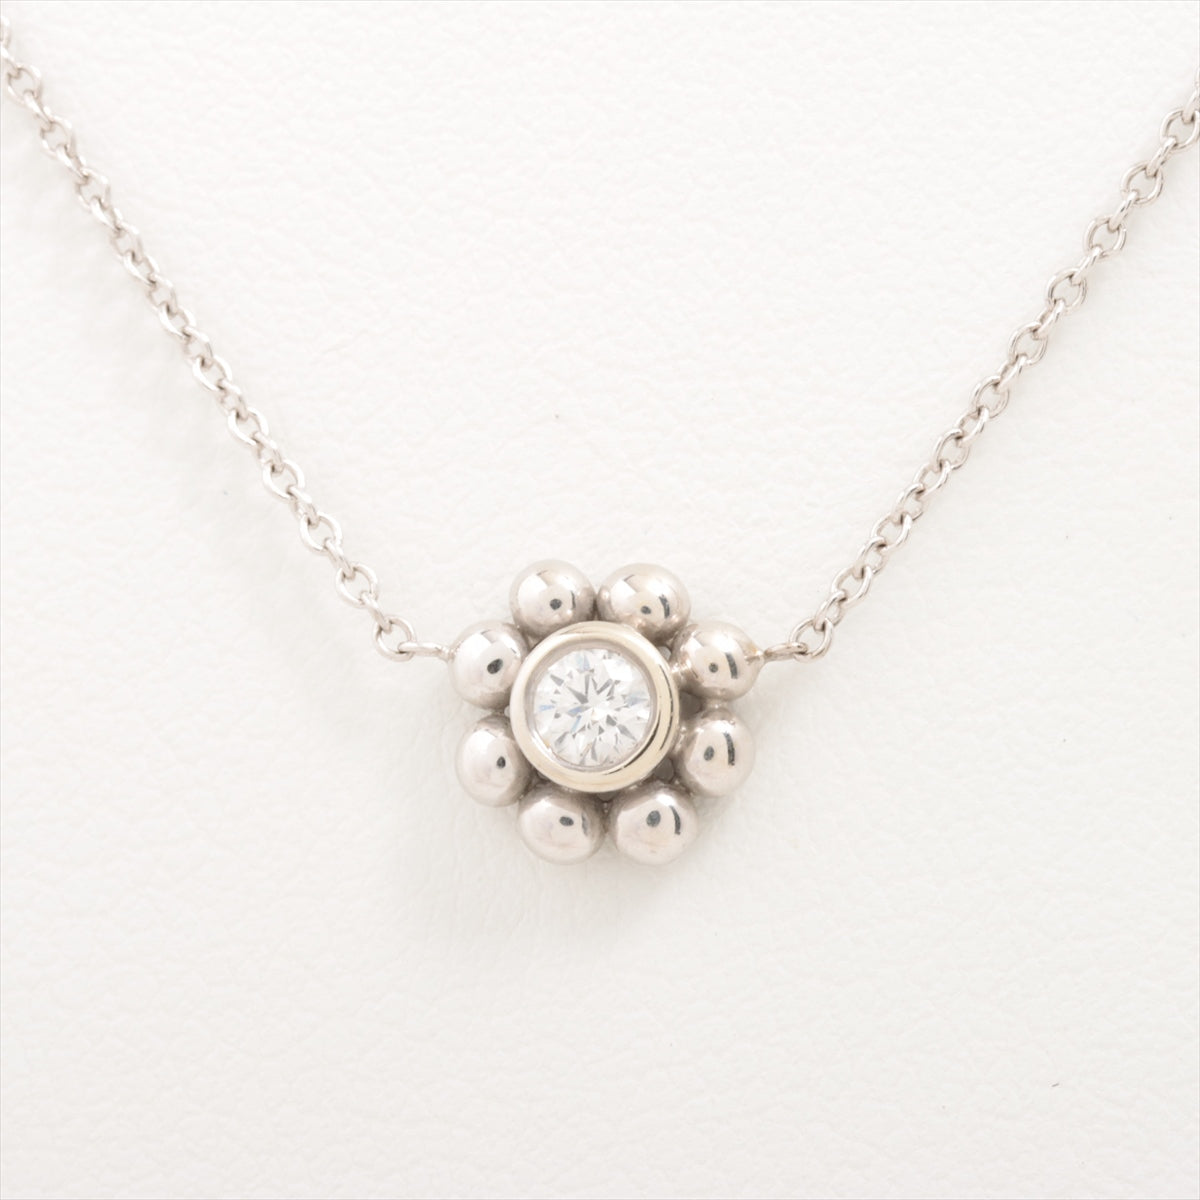 Tiffany Paroma Picasso Diamond Necklace 750 (WG) 2.6g